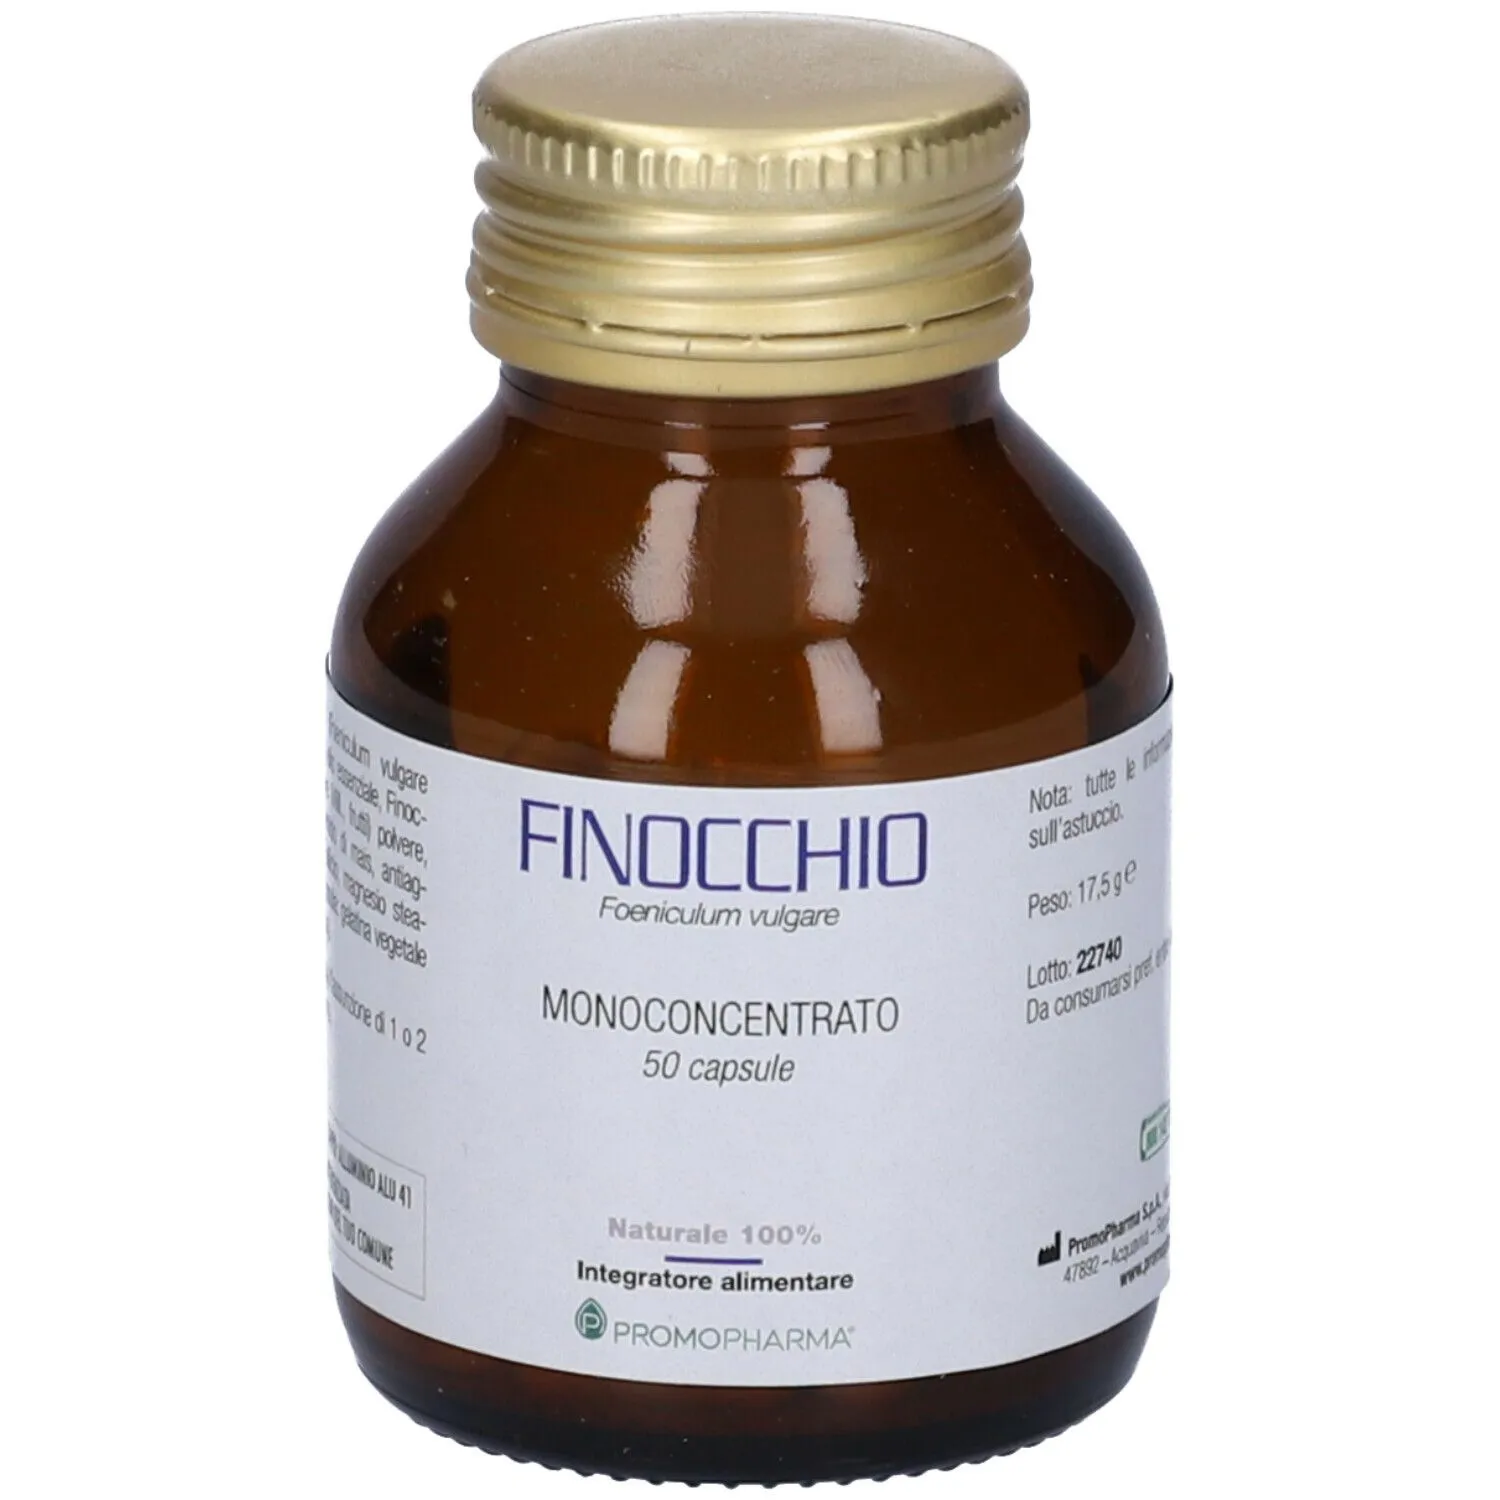 PromoPharma® Finocchio